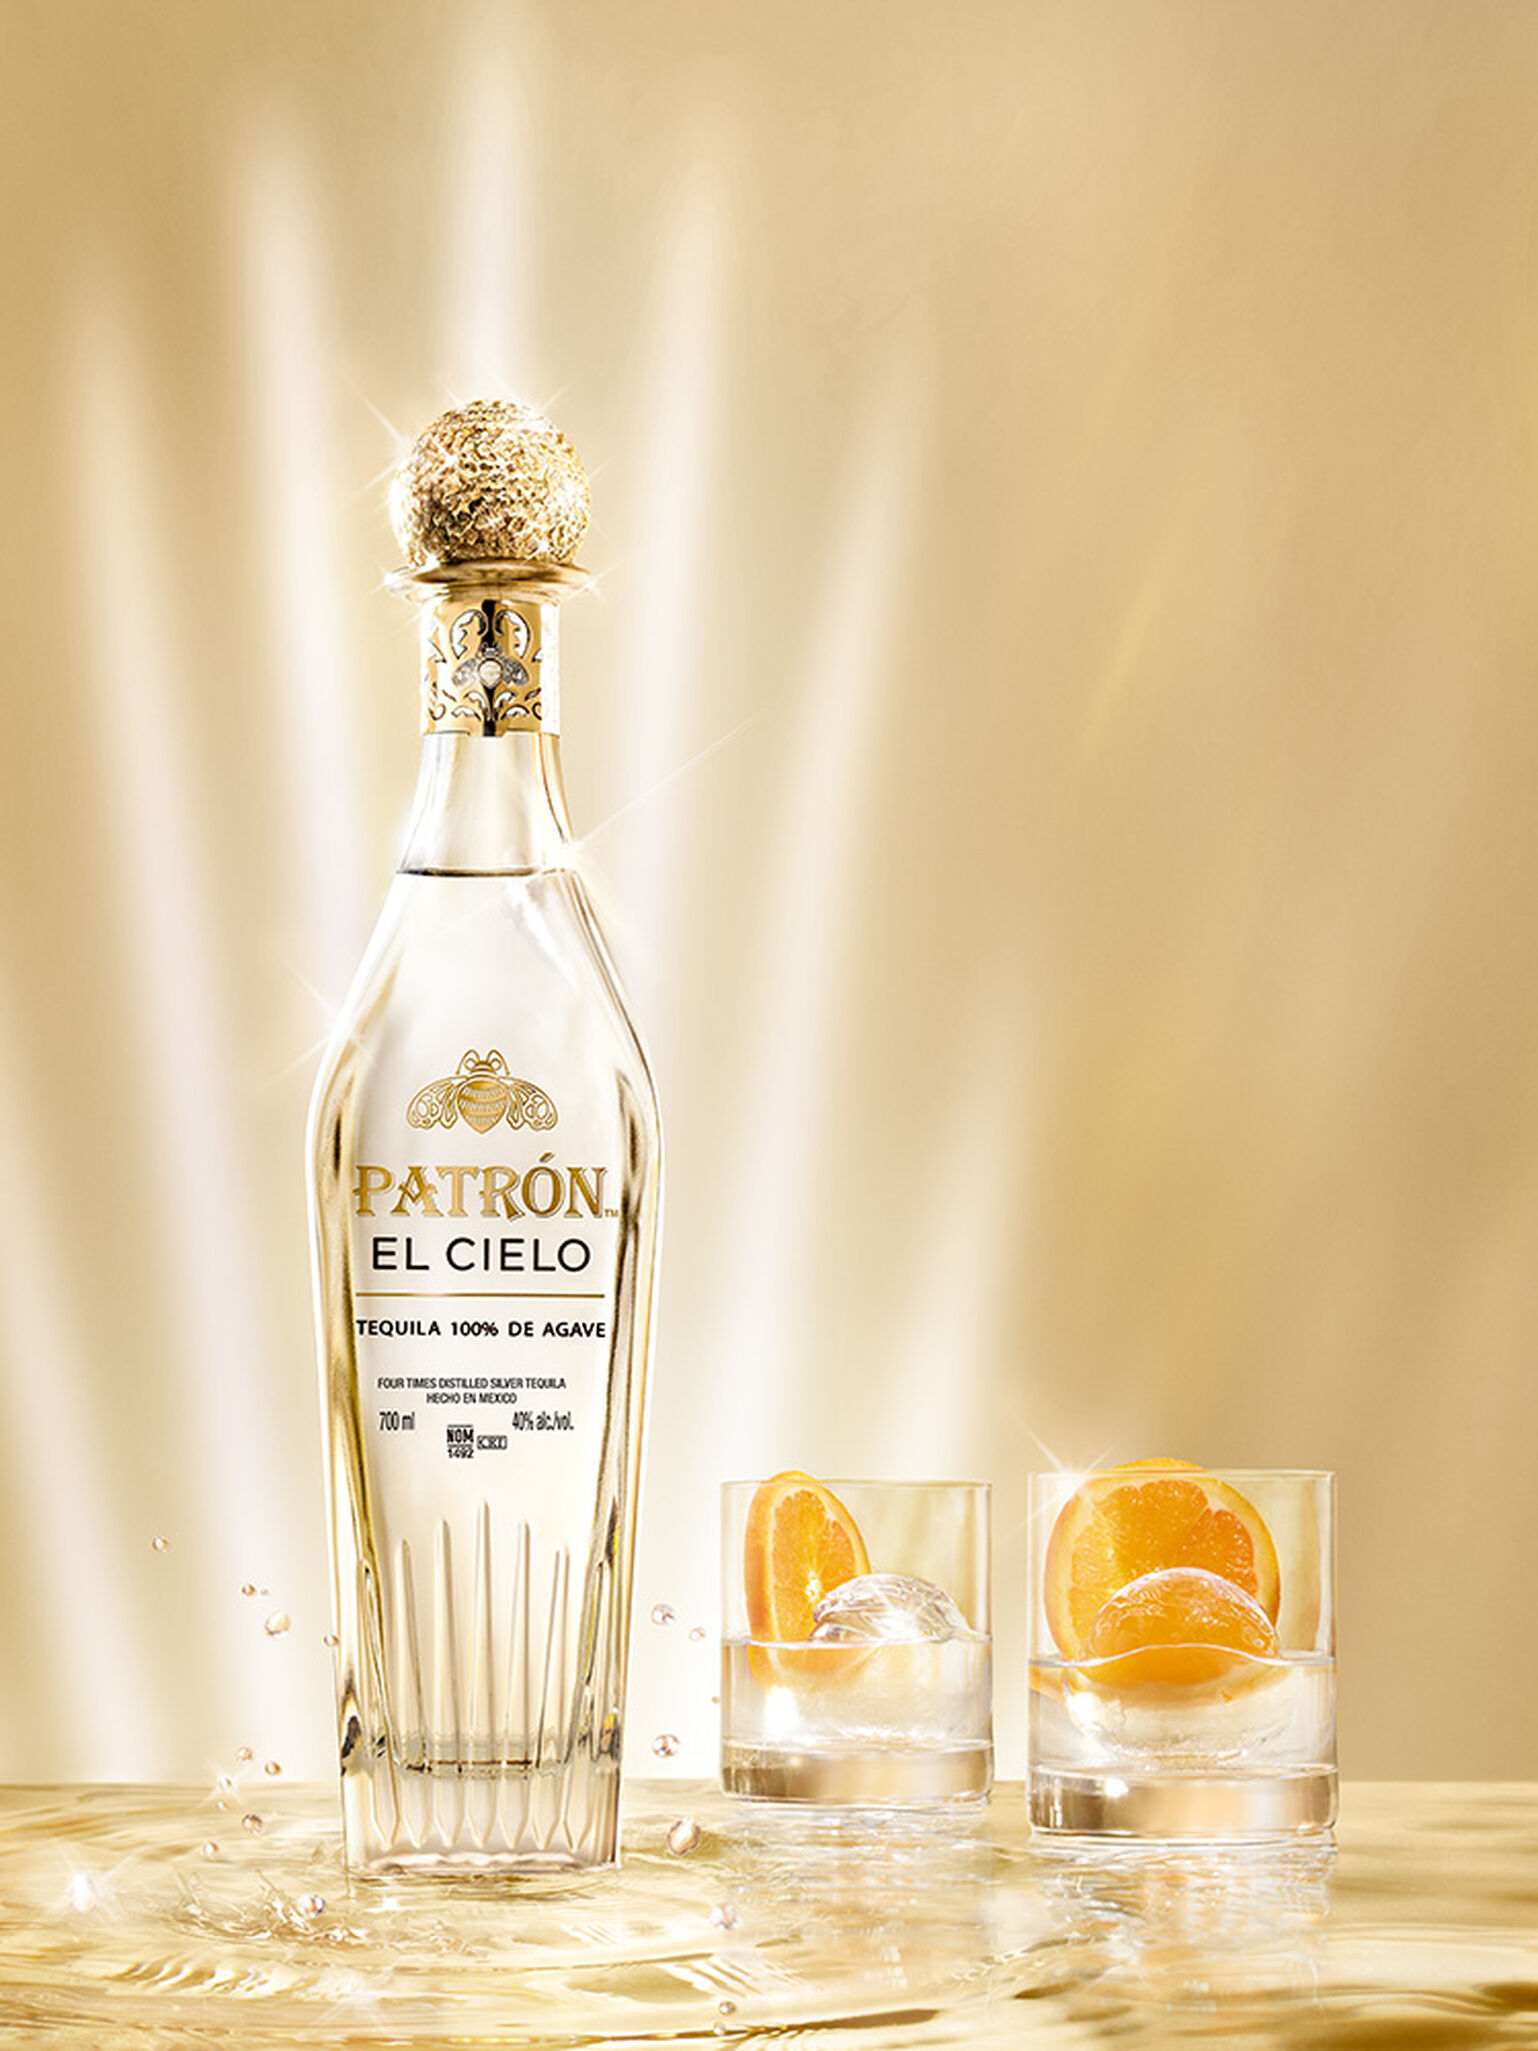 Bottle of PATRÓN EL CIELO with two cocktails